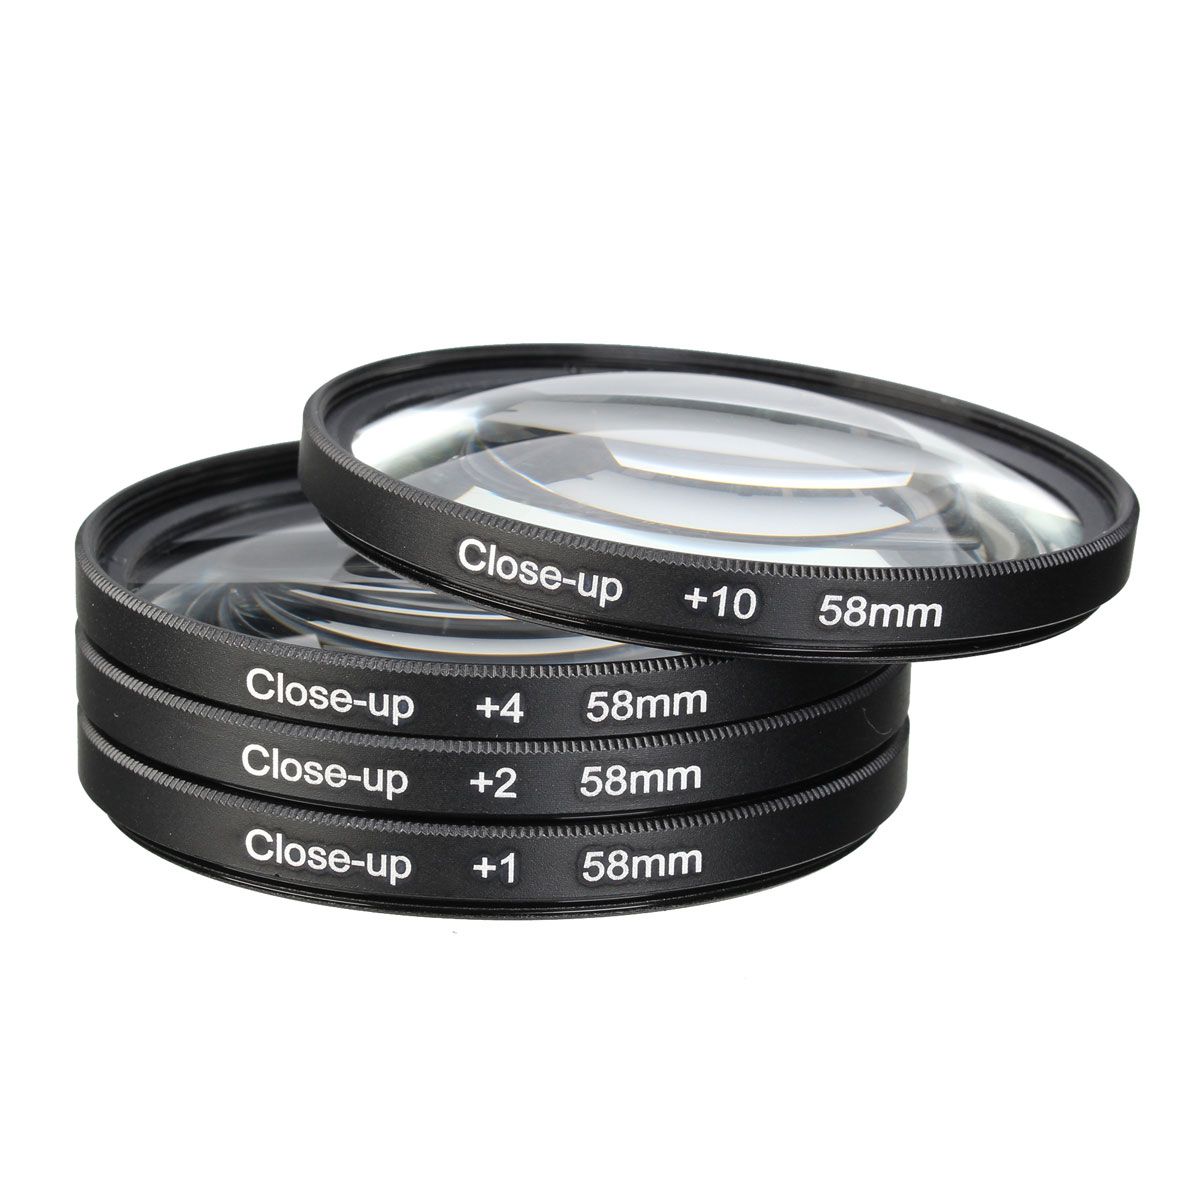 Universal-58mm-Macro-Close-Up-Filter-Lens-Kit-1-2-4-10-for-58mm-Camera-Lens-1126474